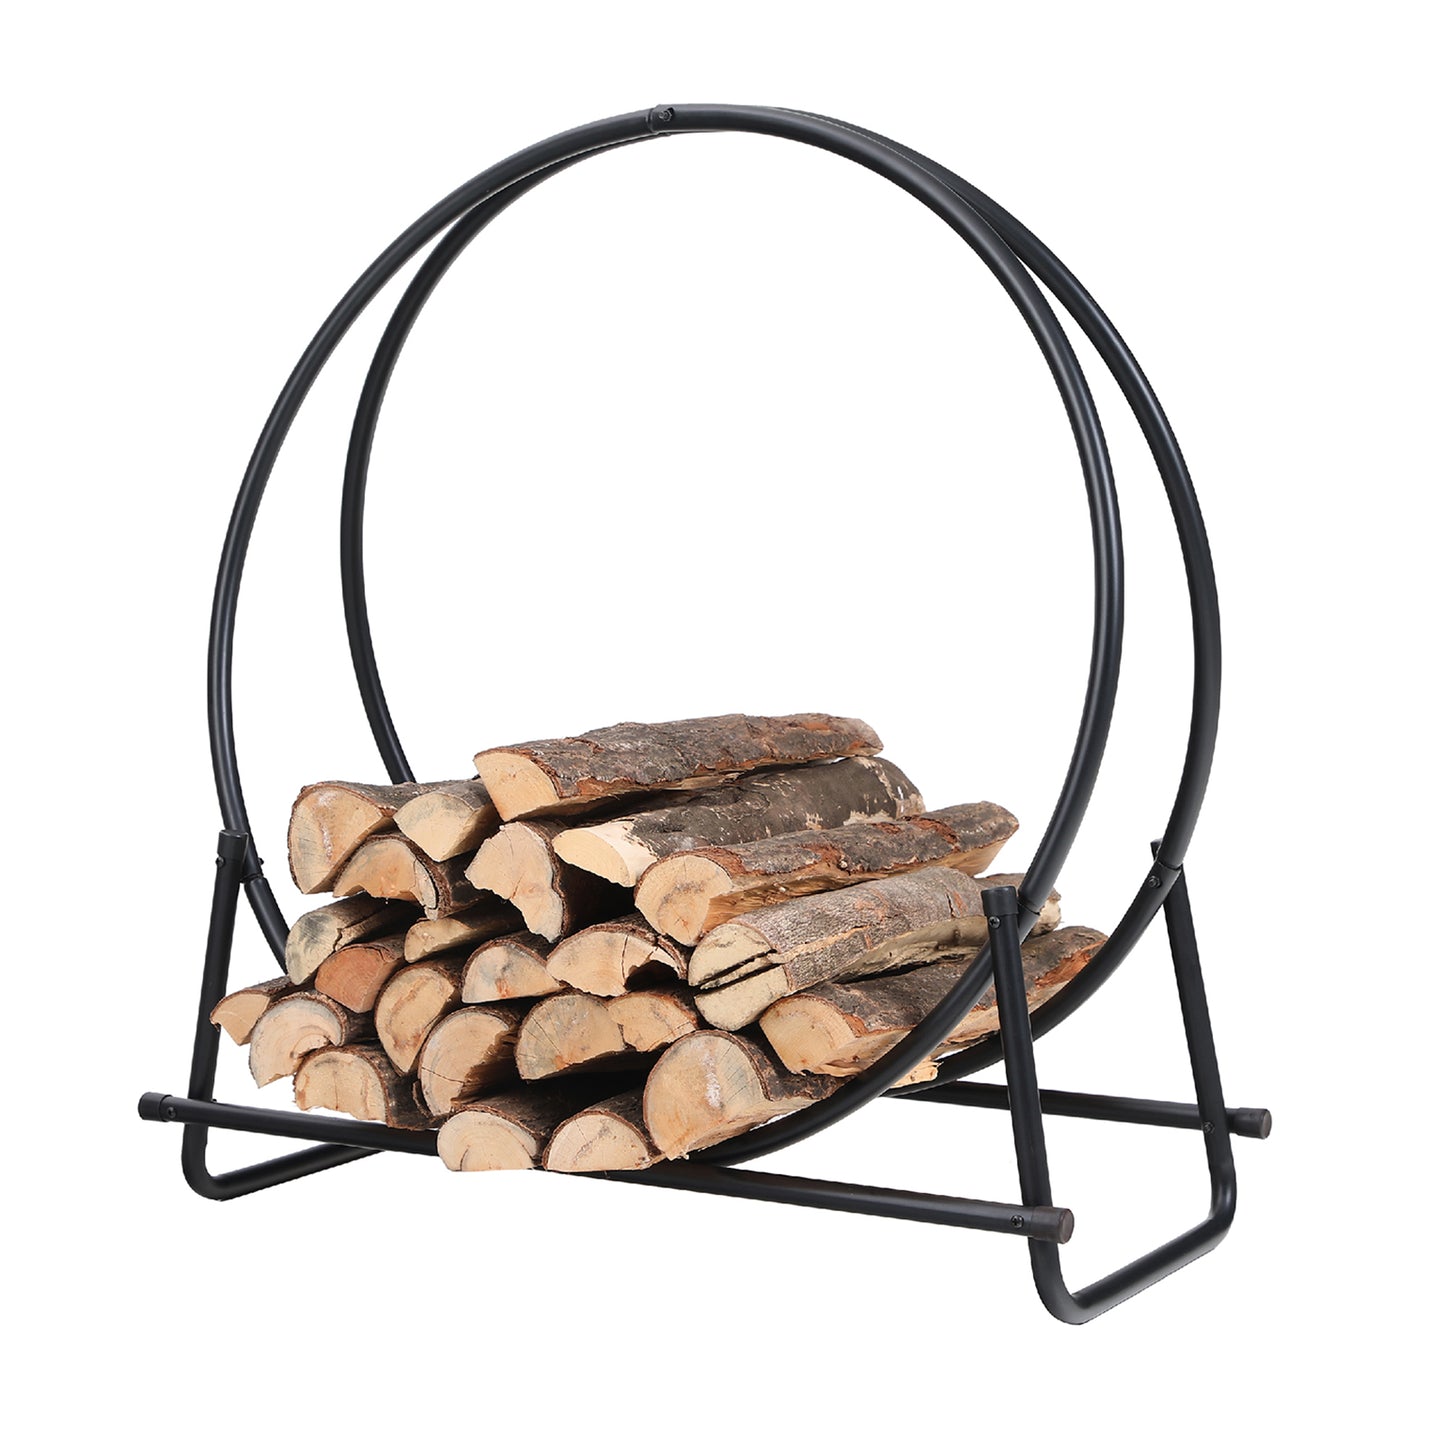 Sophia & William Garden 30" Steel Log Hoop Firewood Rack for Fireplace - Black